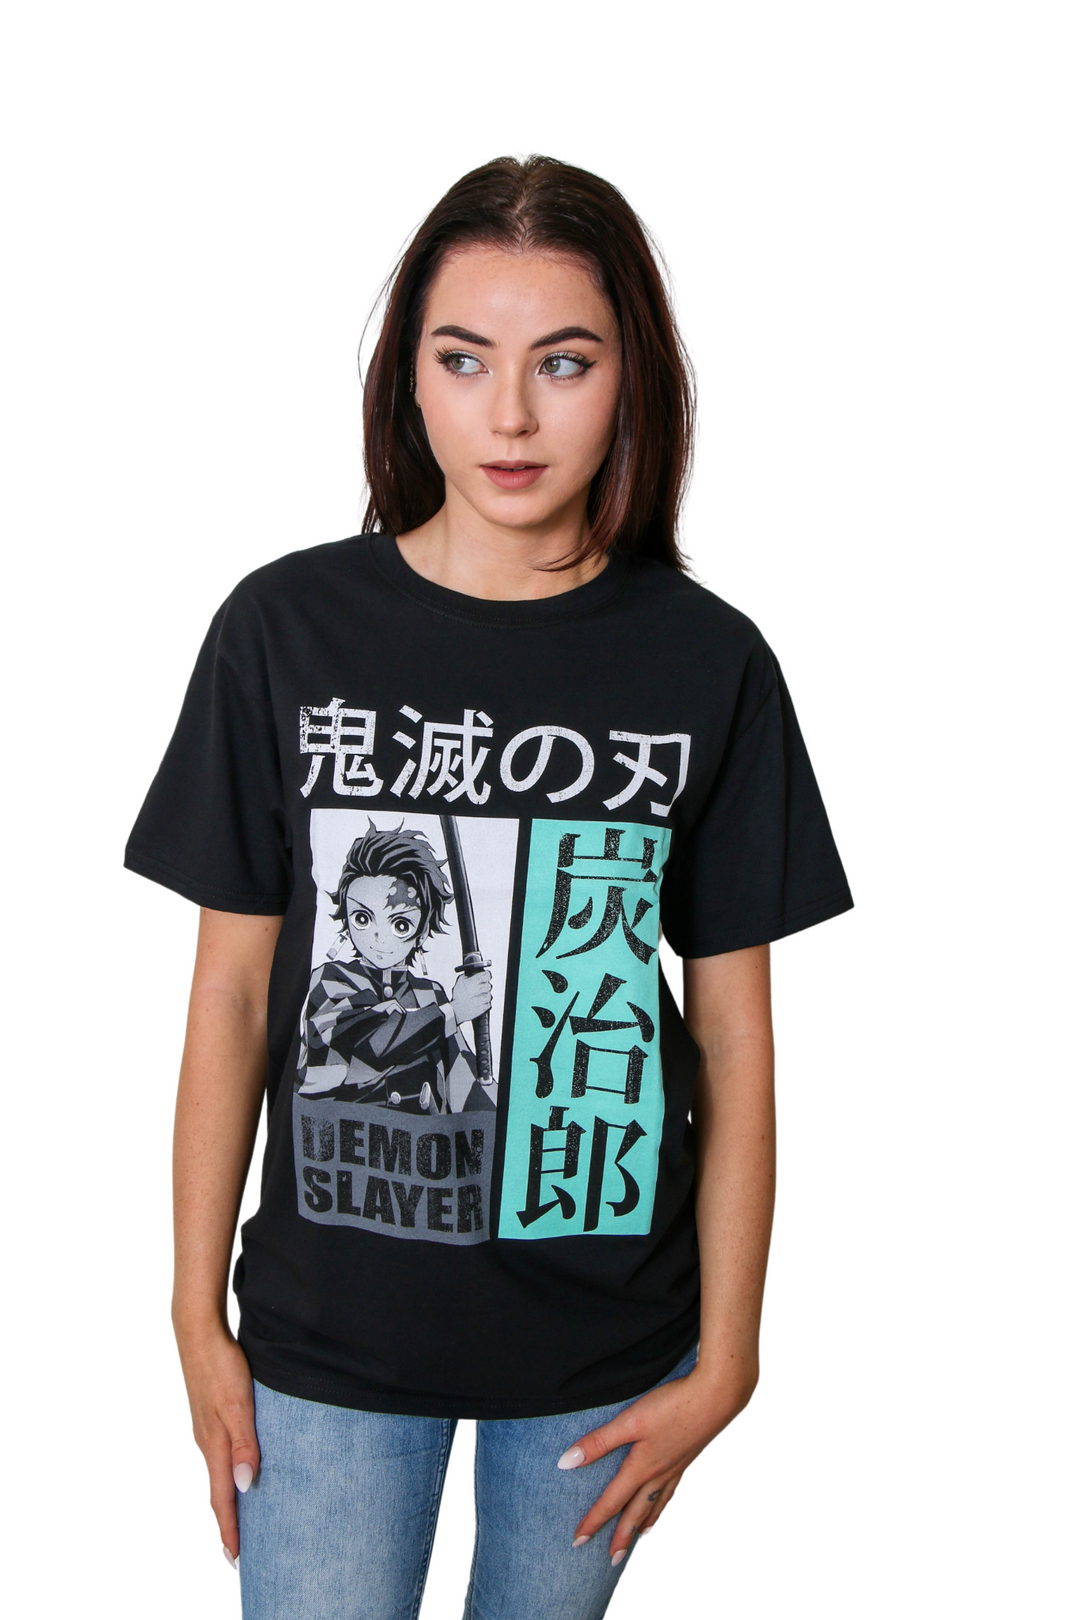 Demon Slayer Tanjiro Black T-Shirt